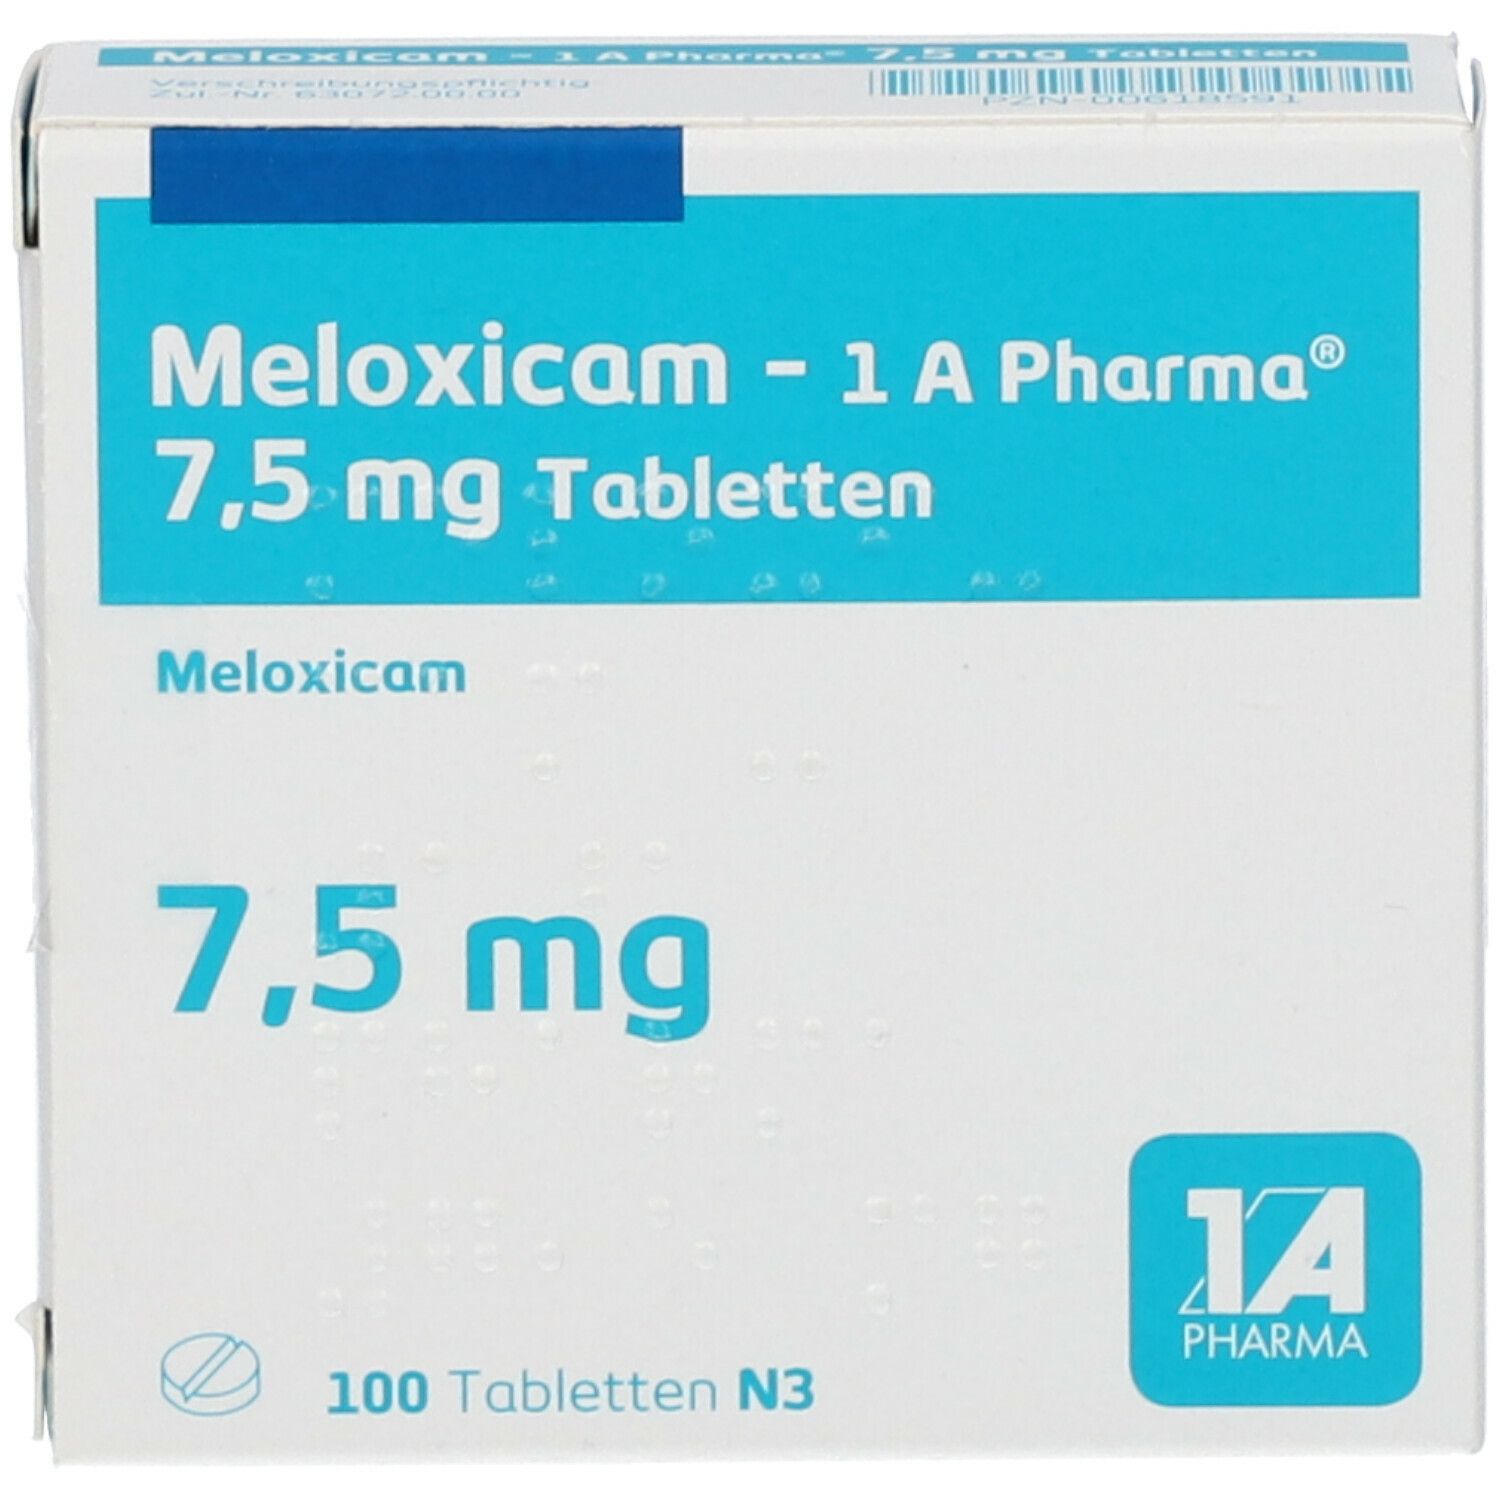 Meloxicam - 1 A Pharma® 7,5 mg